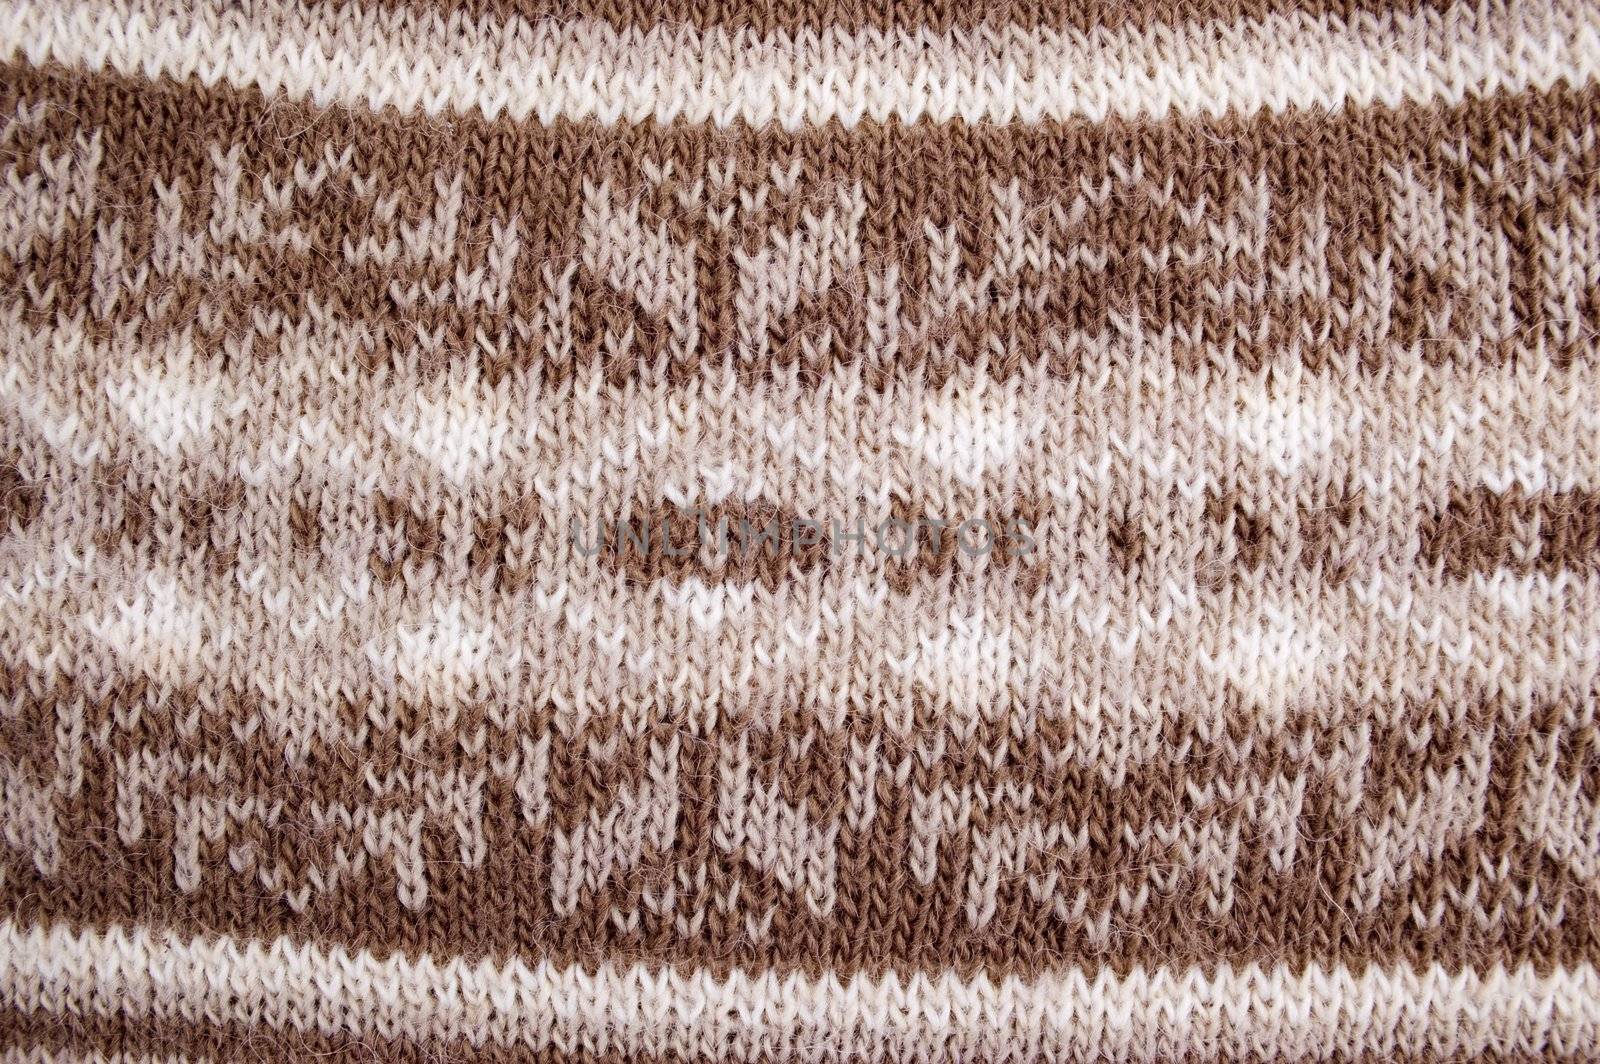 knitting pattern by Triphka